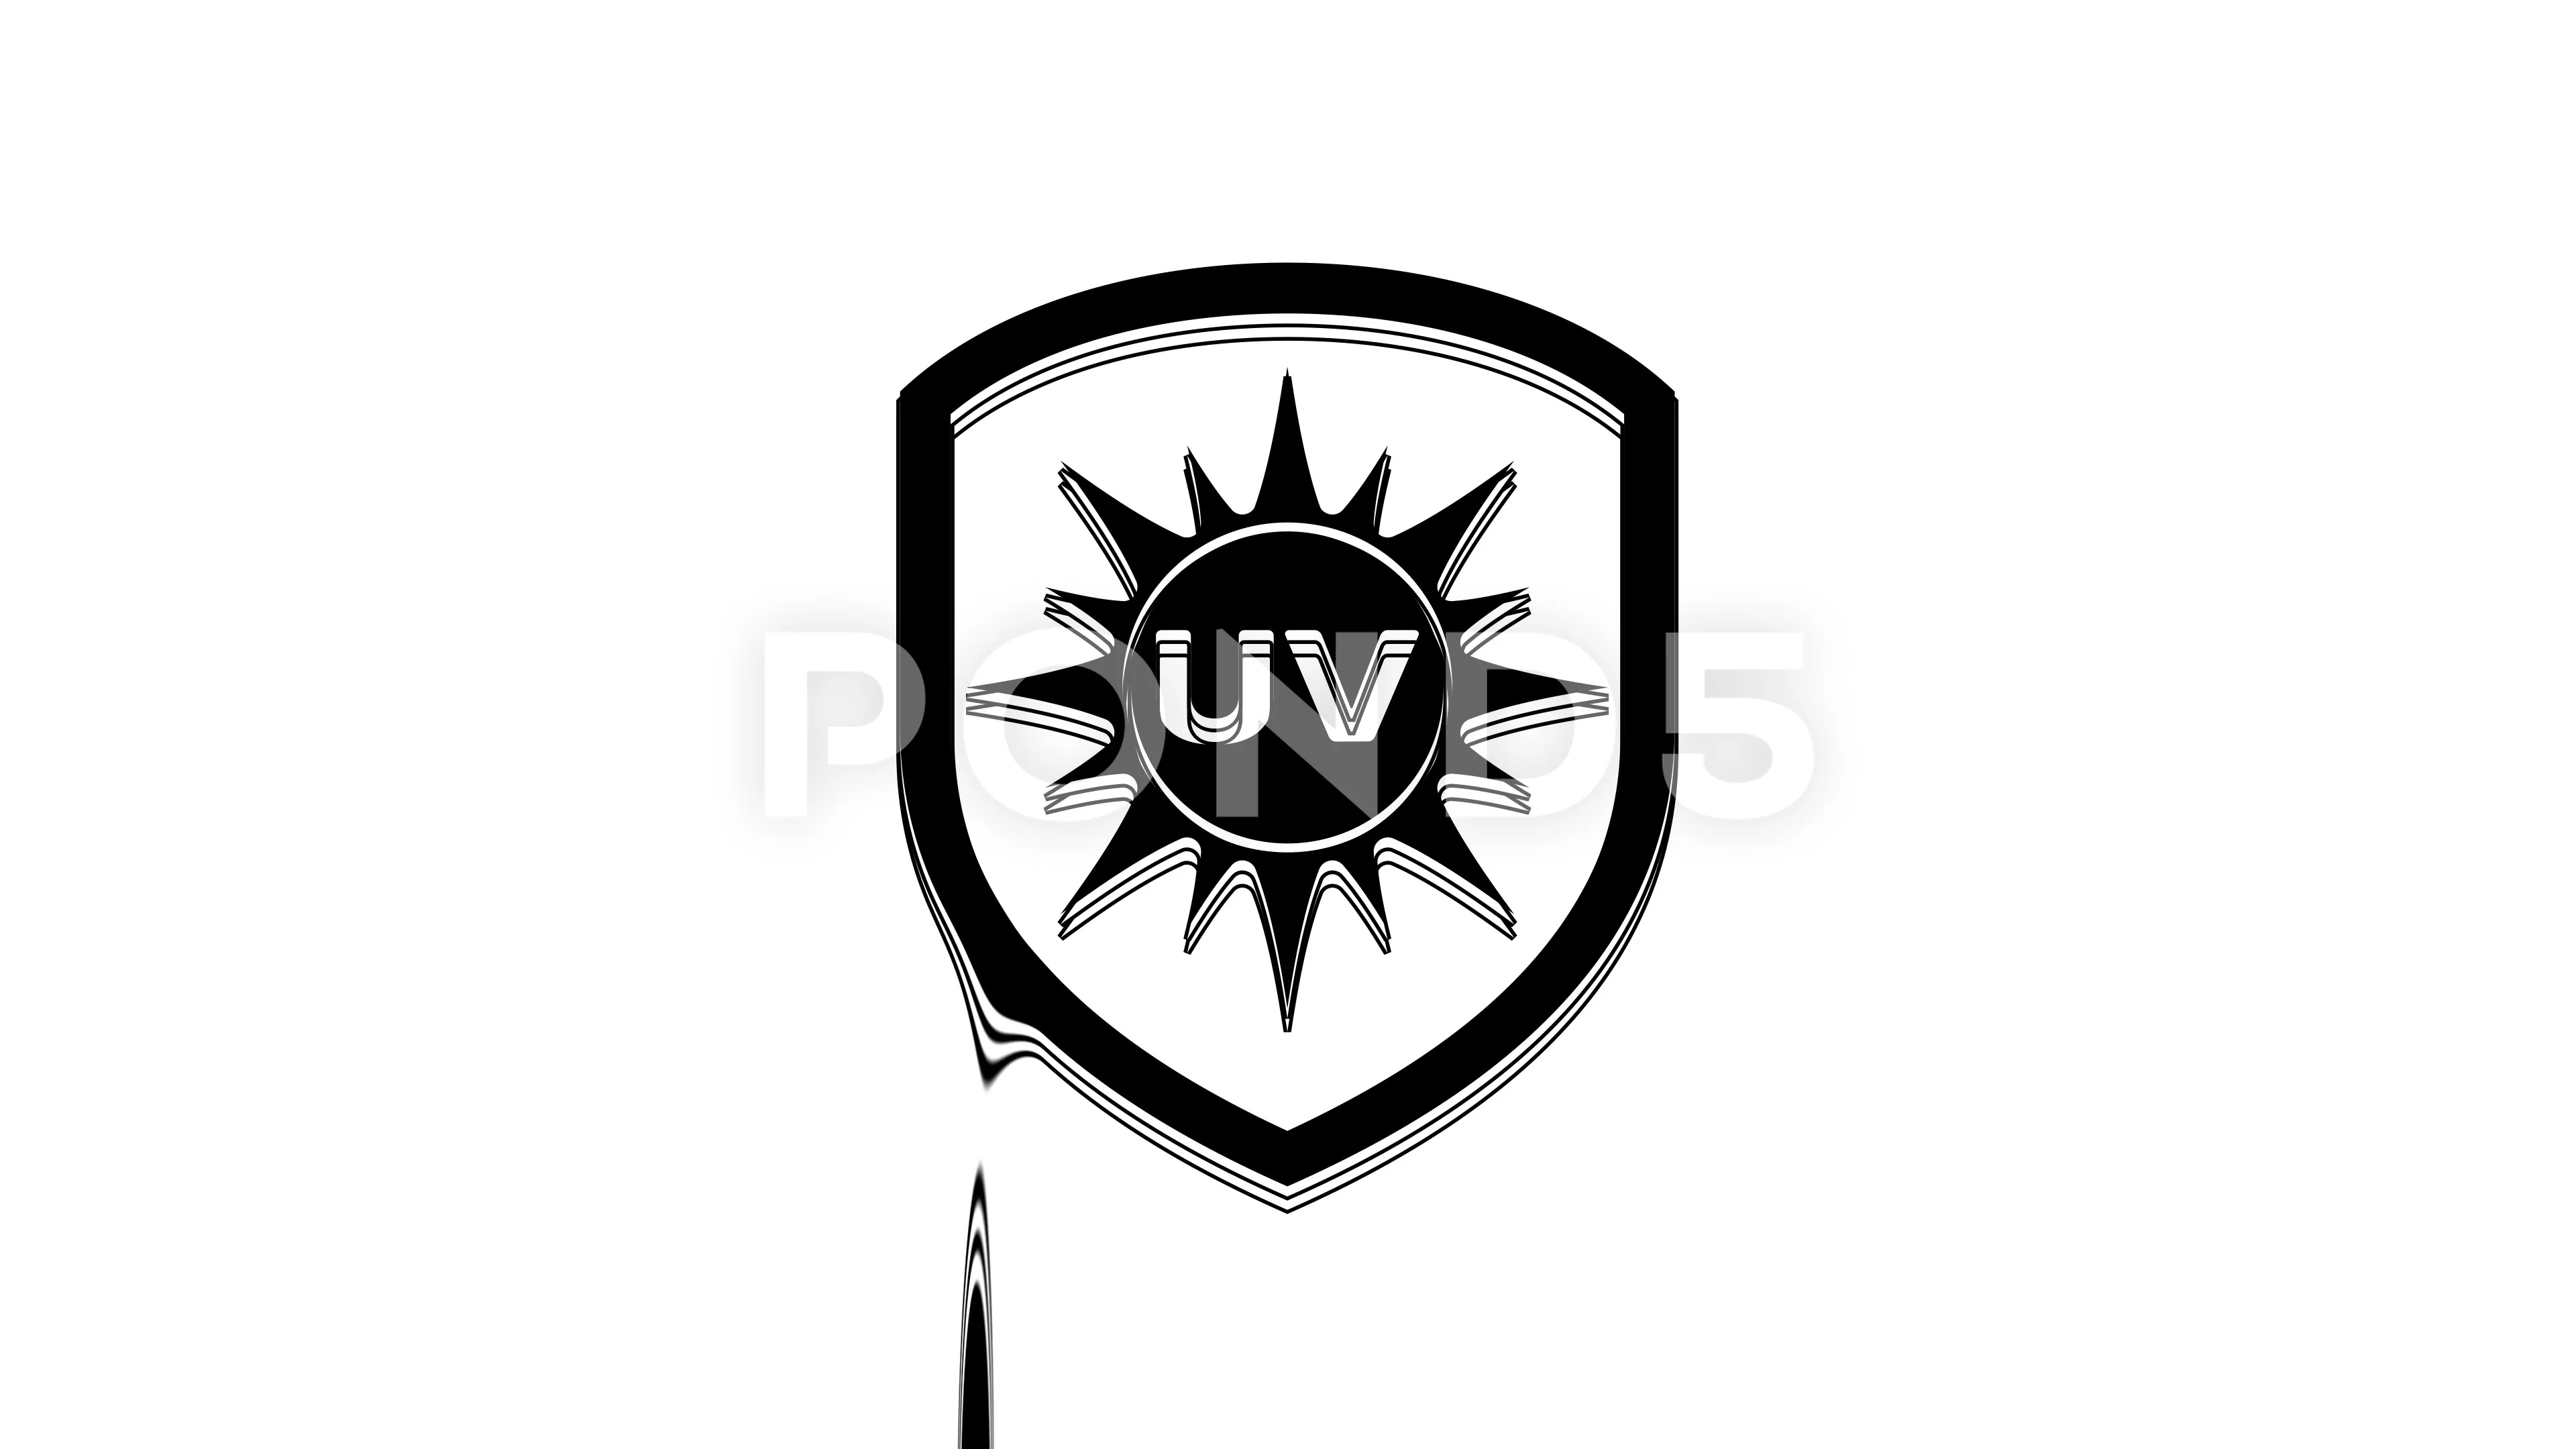 Black UV protection icon isolated on white background. Ultra